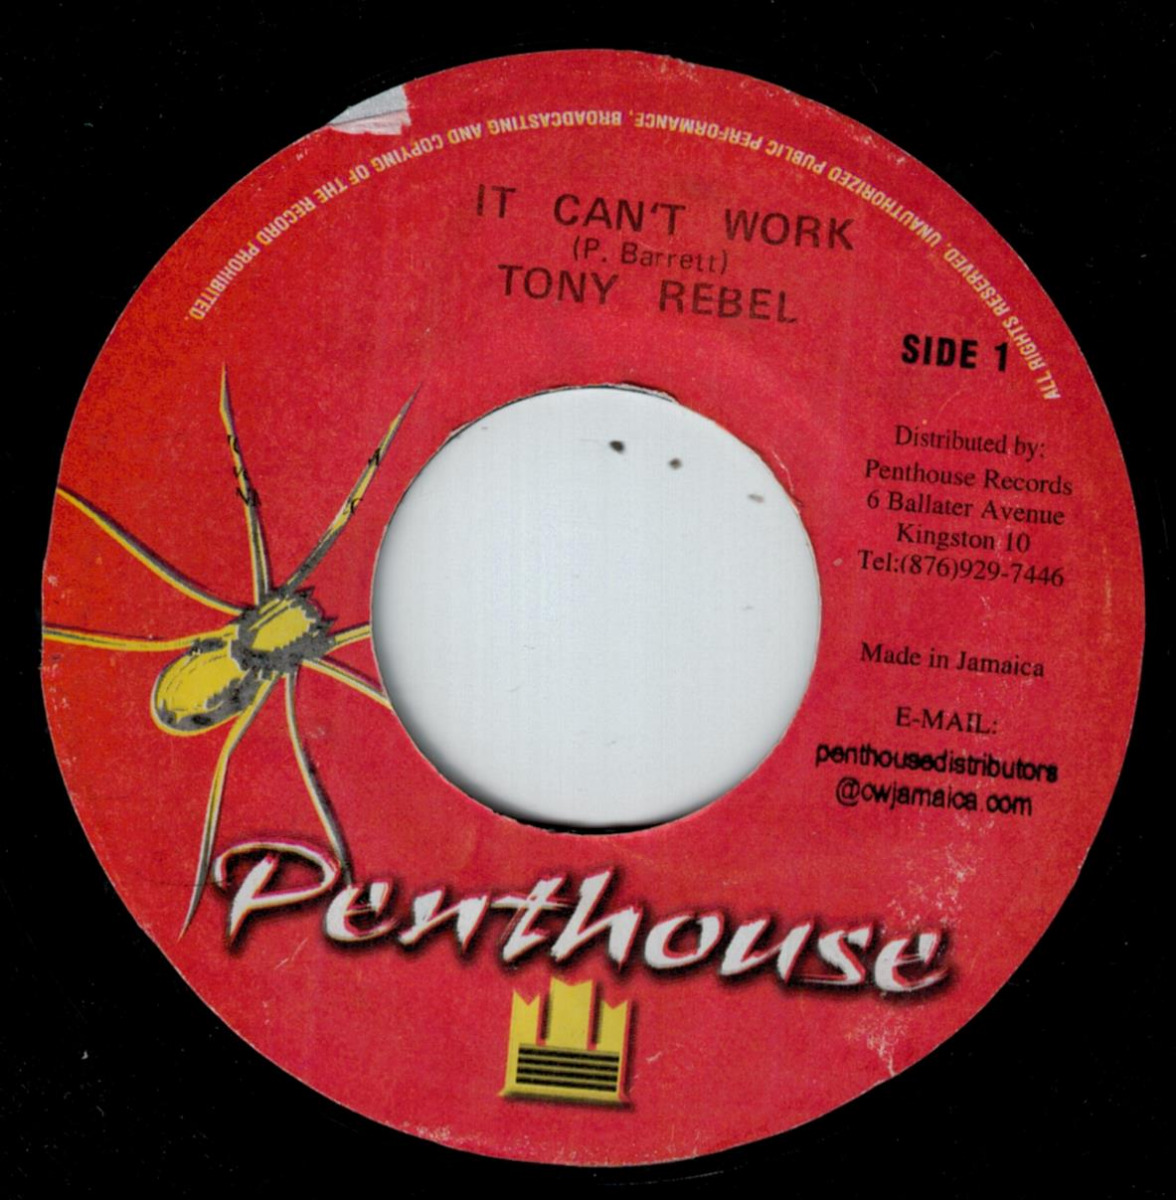 Tony Rebel - It Can't Work / Version (7")